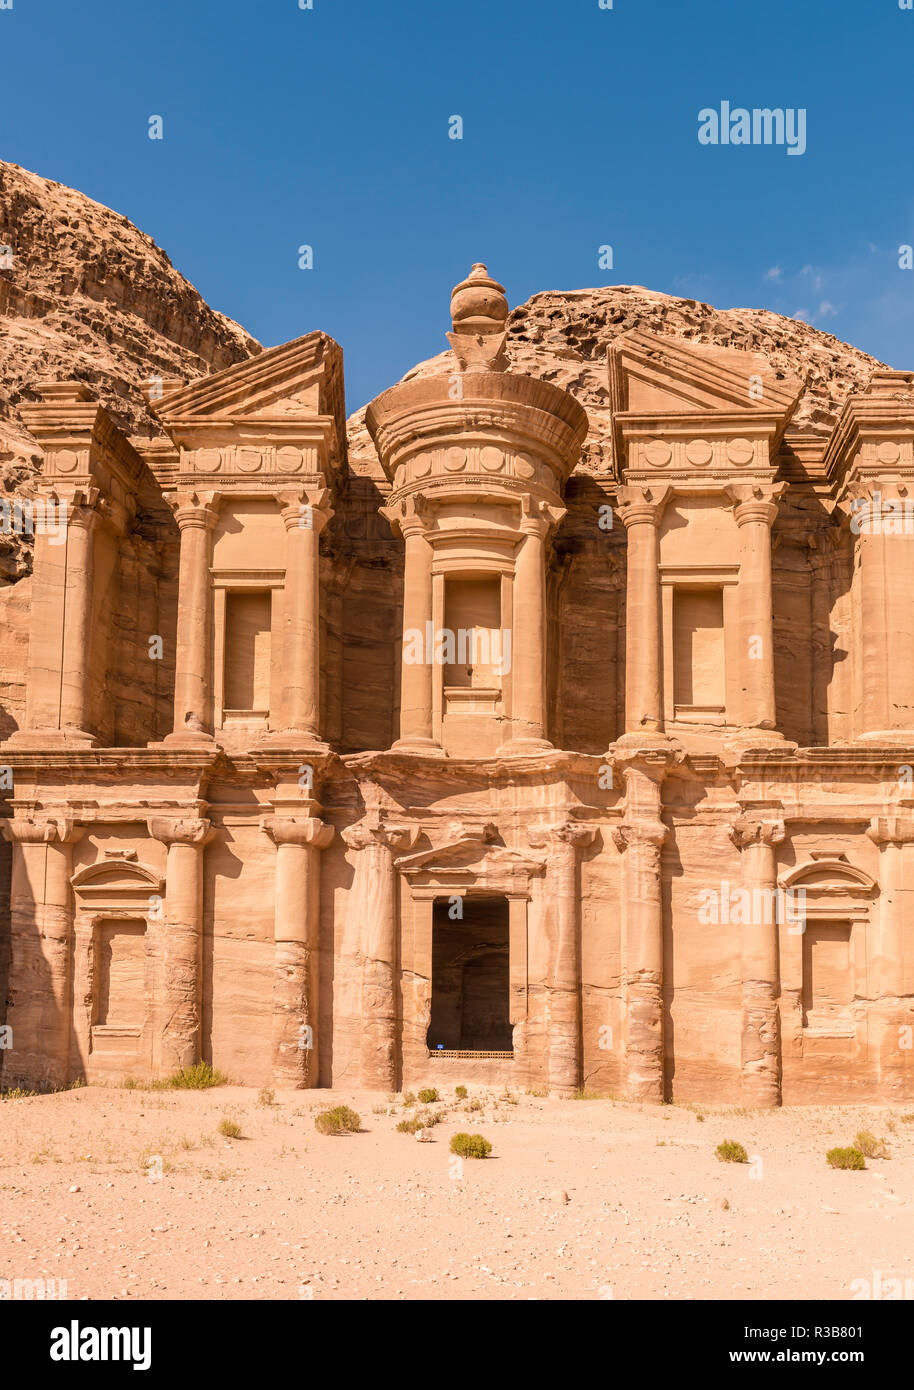 Monasterio, templo de rock Ad Deir, la tumba de roca, arquitectura, Nabataean Khazne Faraun, mausoleo en la ciudad de Nabataean Petra. Foto de stock